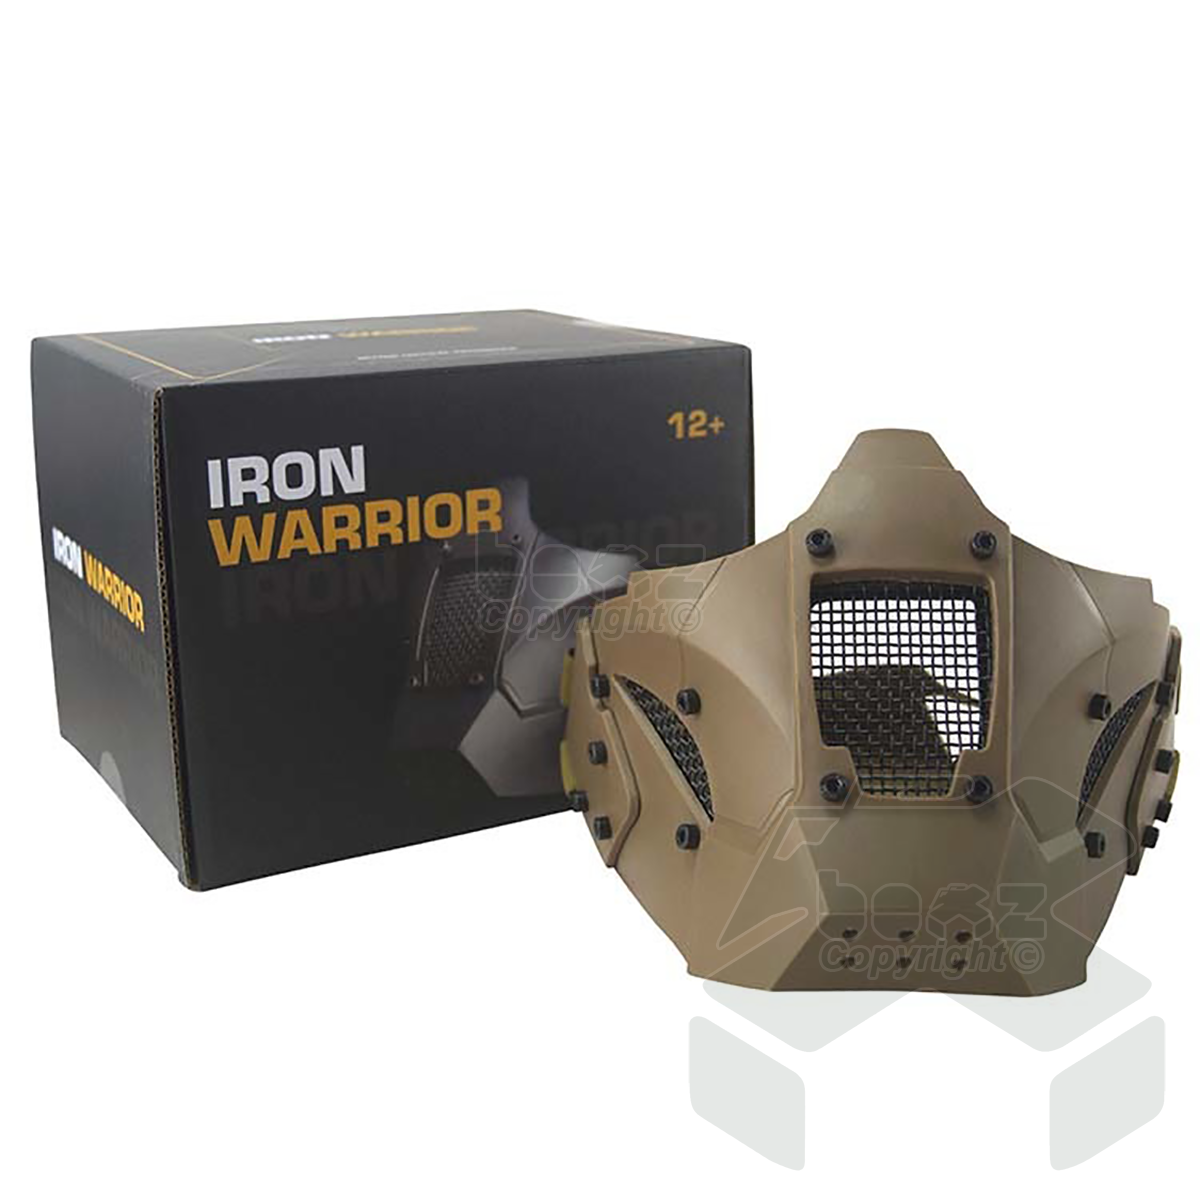 Kombat Iron Warrior Mask -Coyote